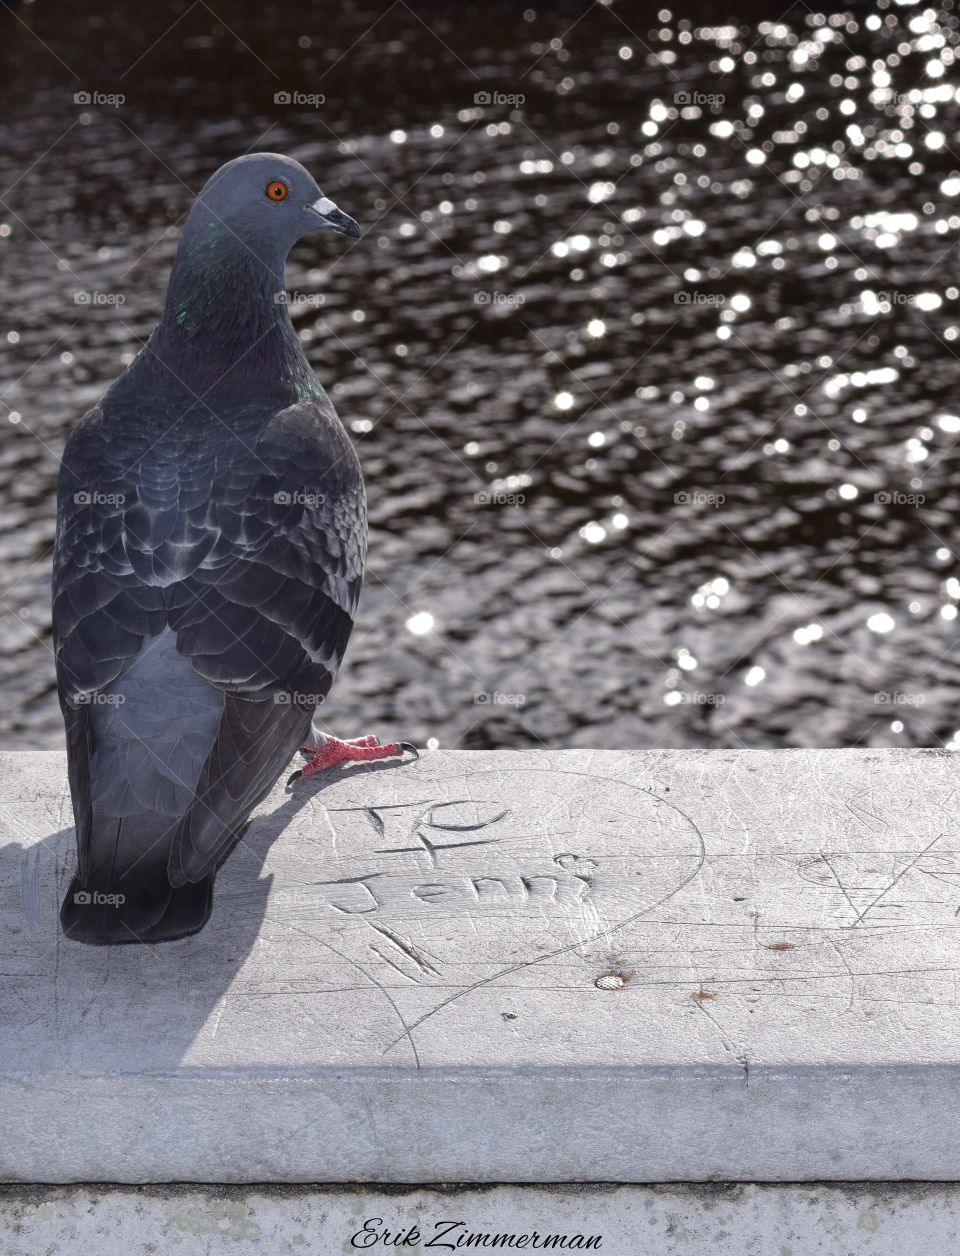 Pigeon love.